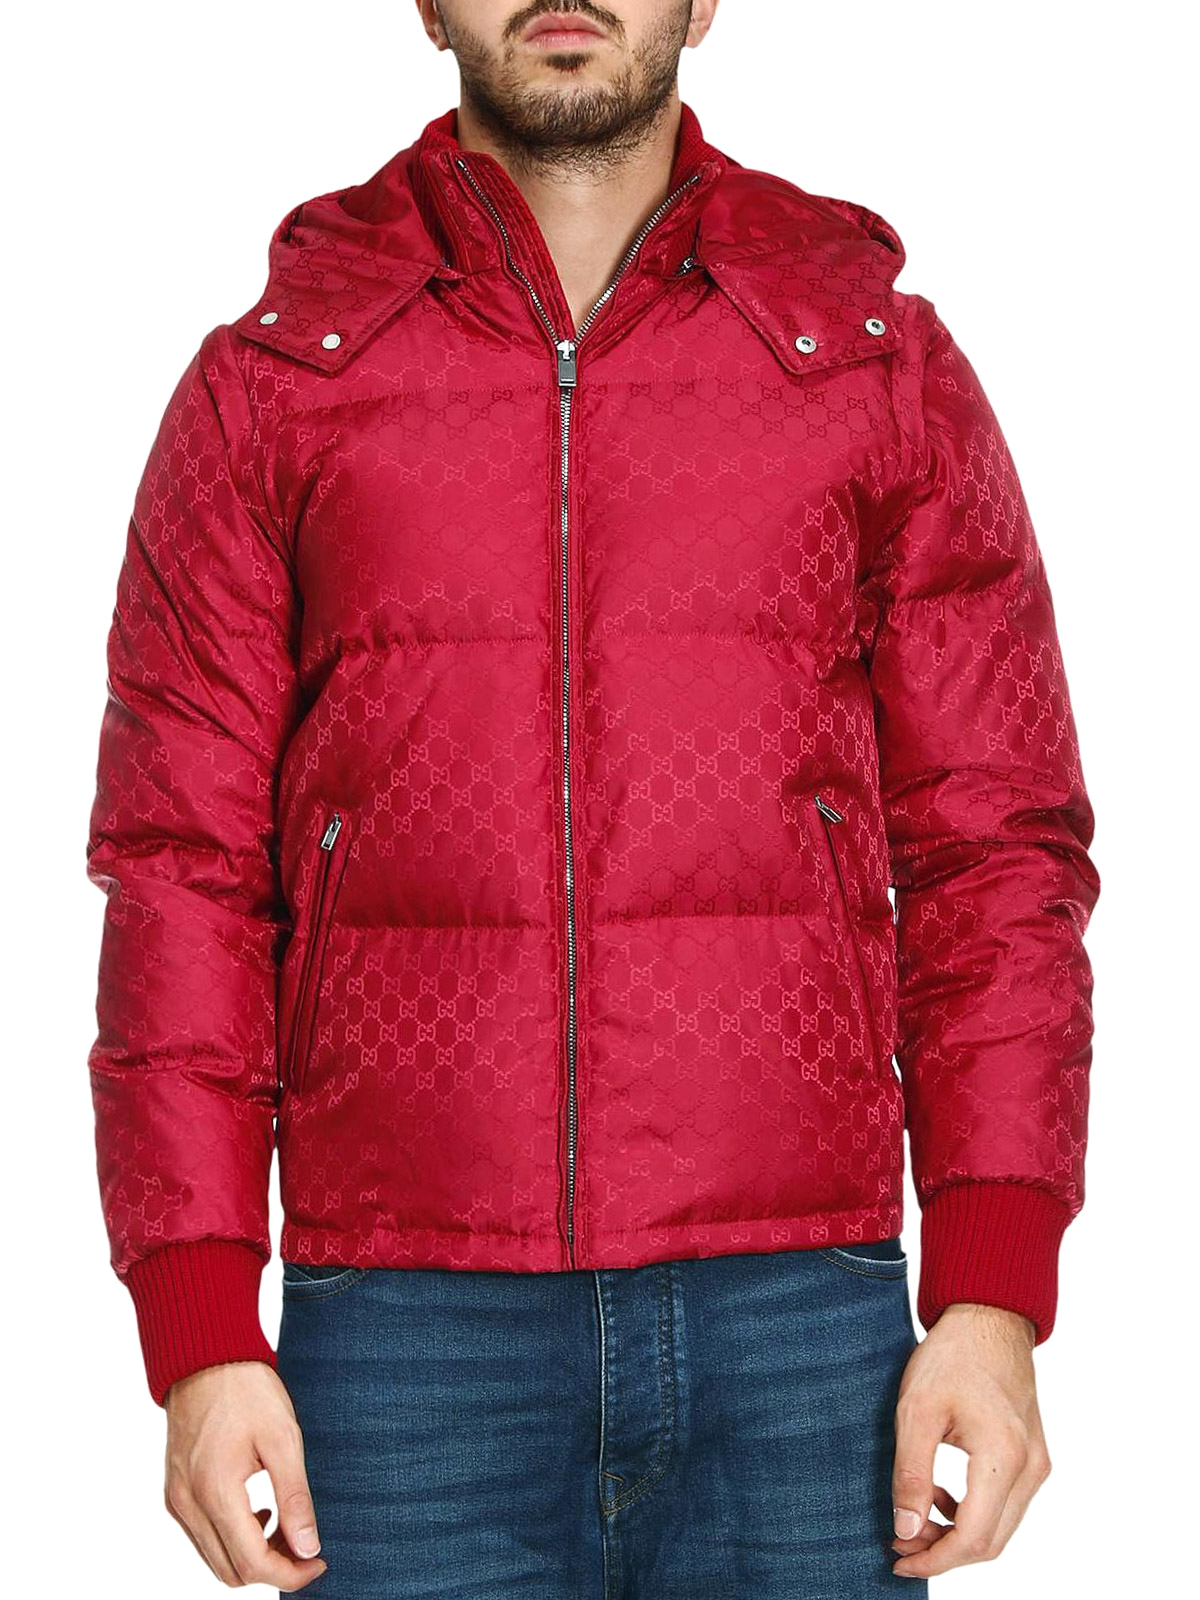 GG jacquard red nylon puffer jacket 